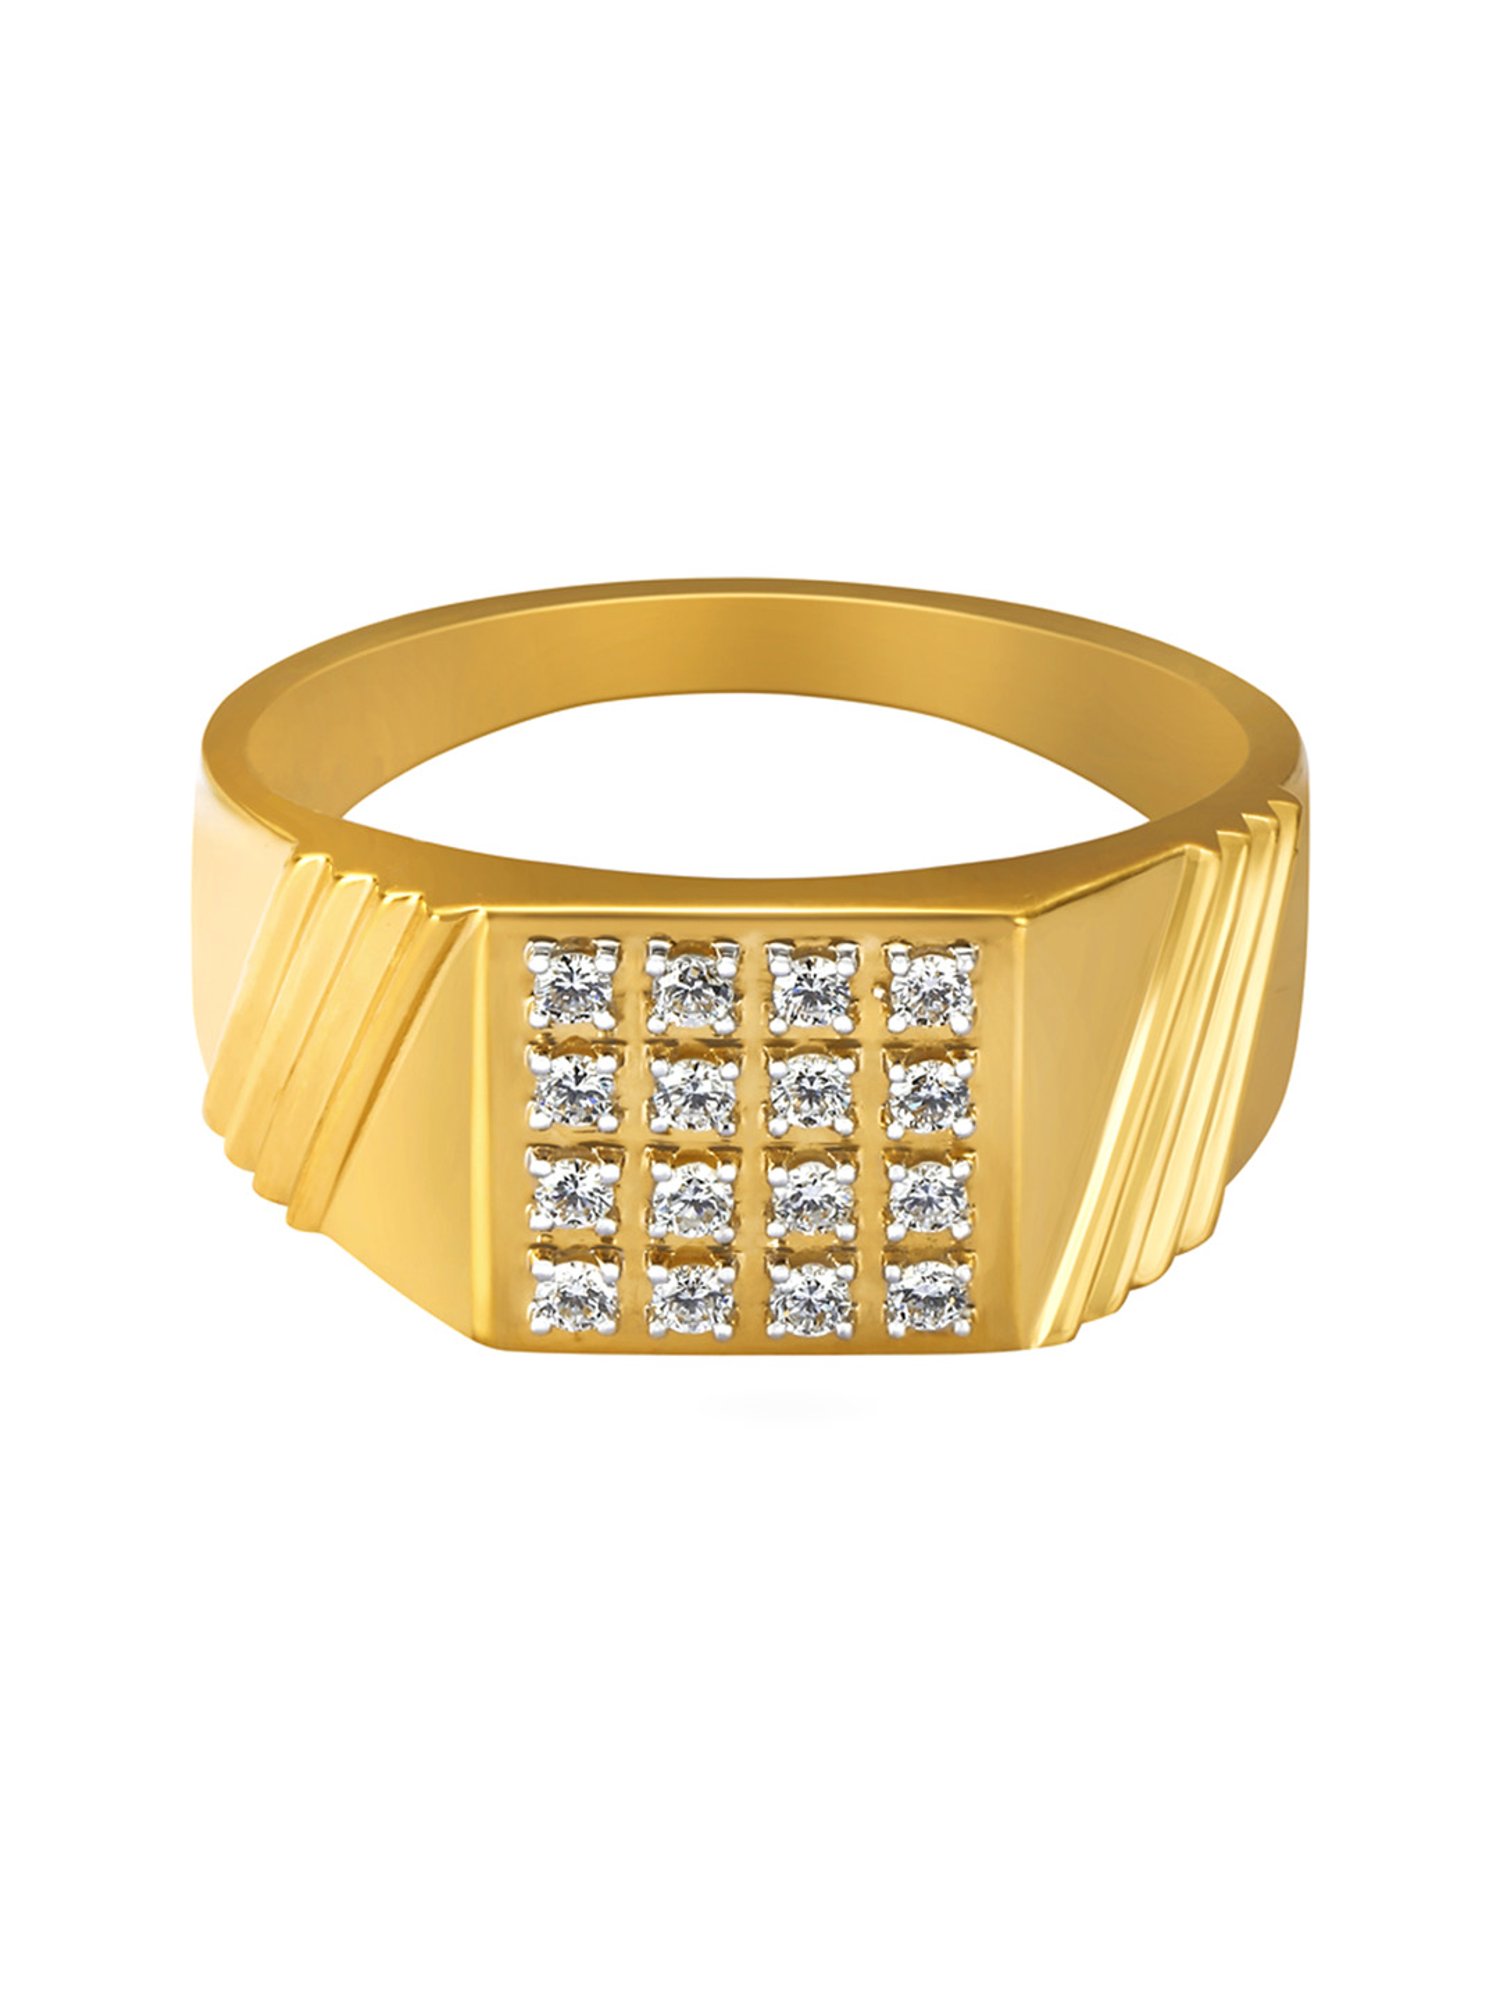 Buy Enhanced 18 Karat Yellow Gold And Gemstone Finger Ring at Best Price |  Tanishq UAE